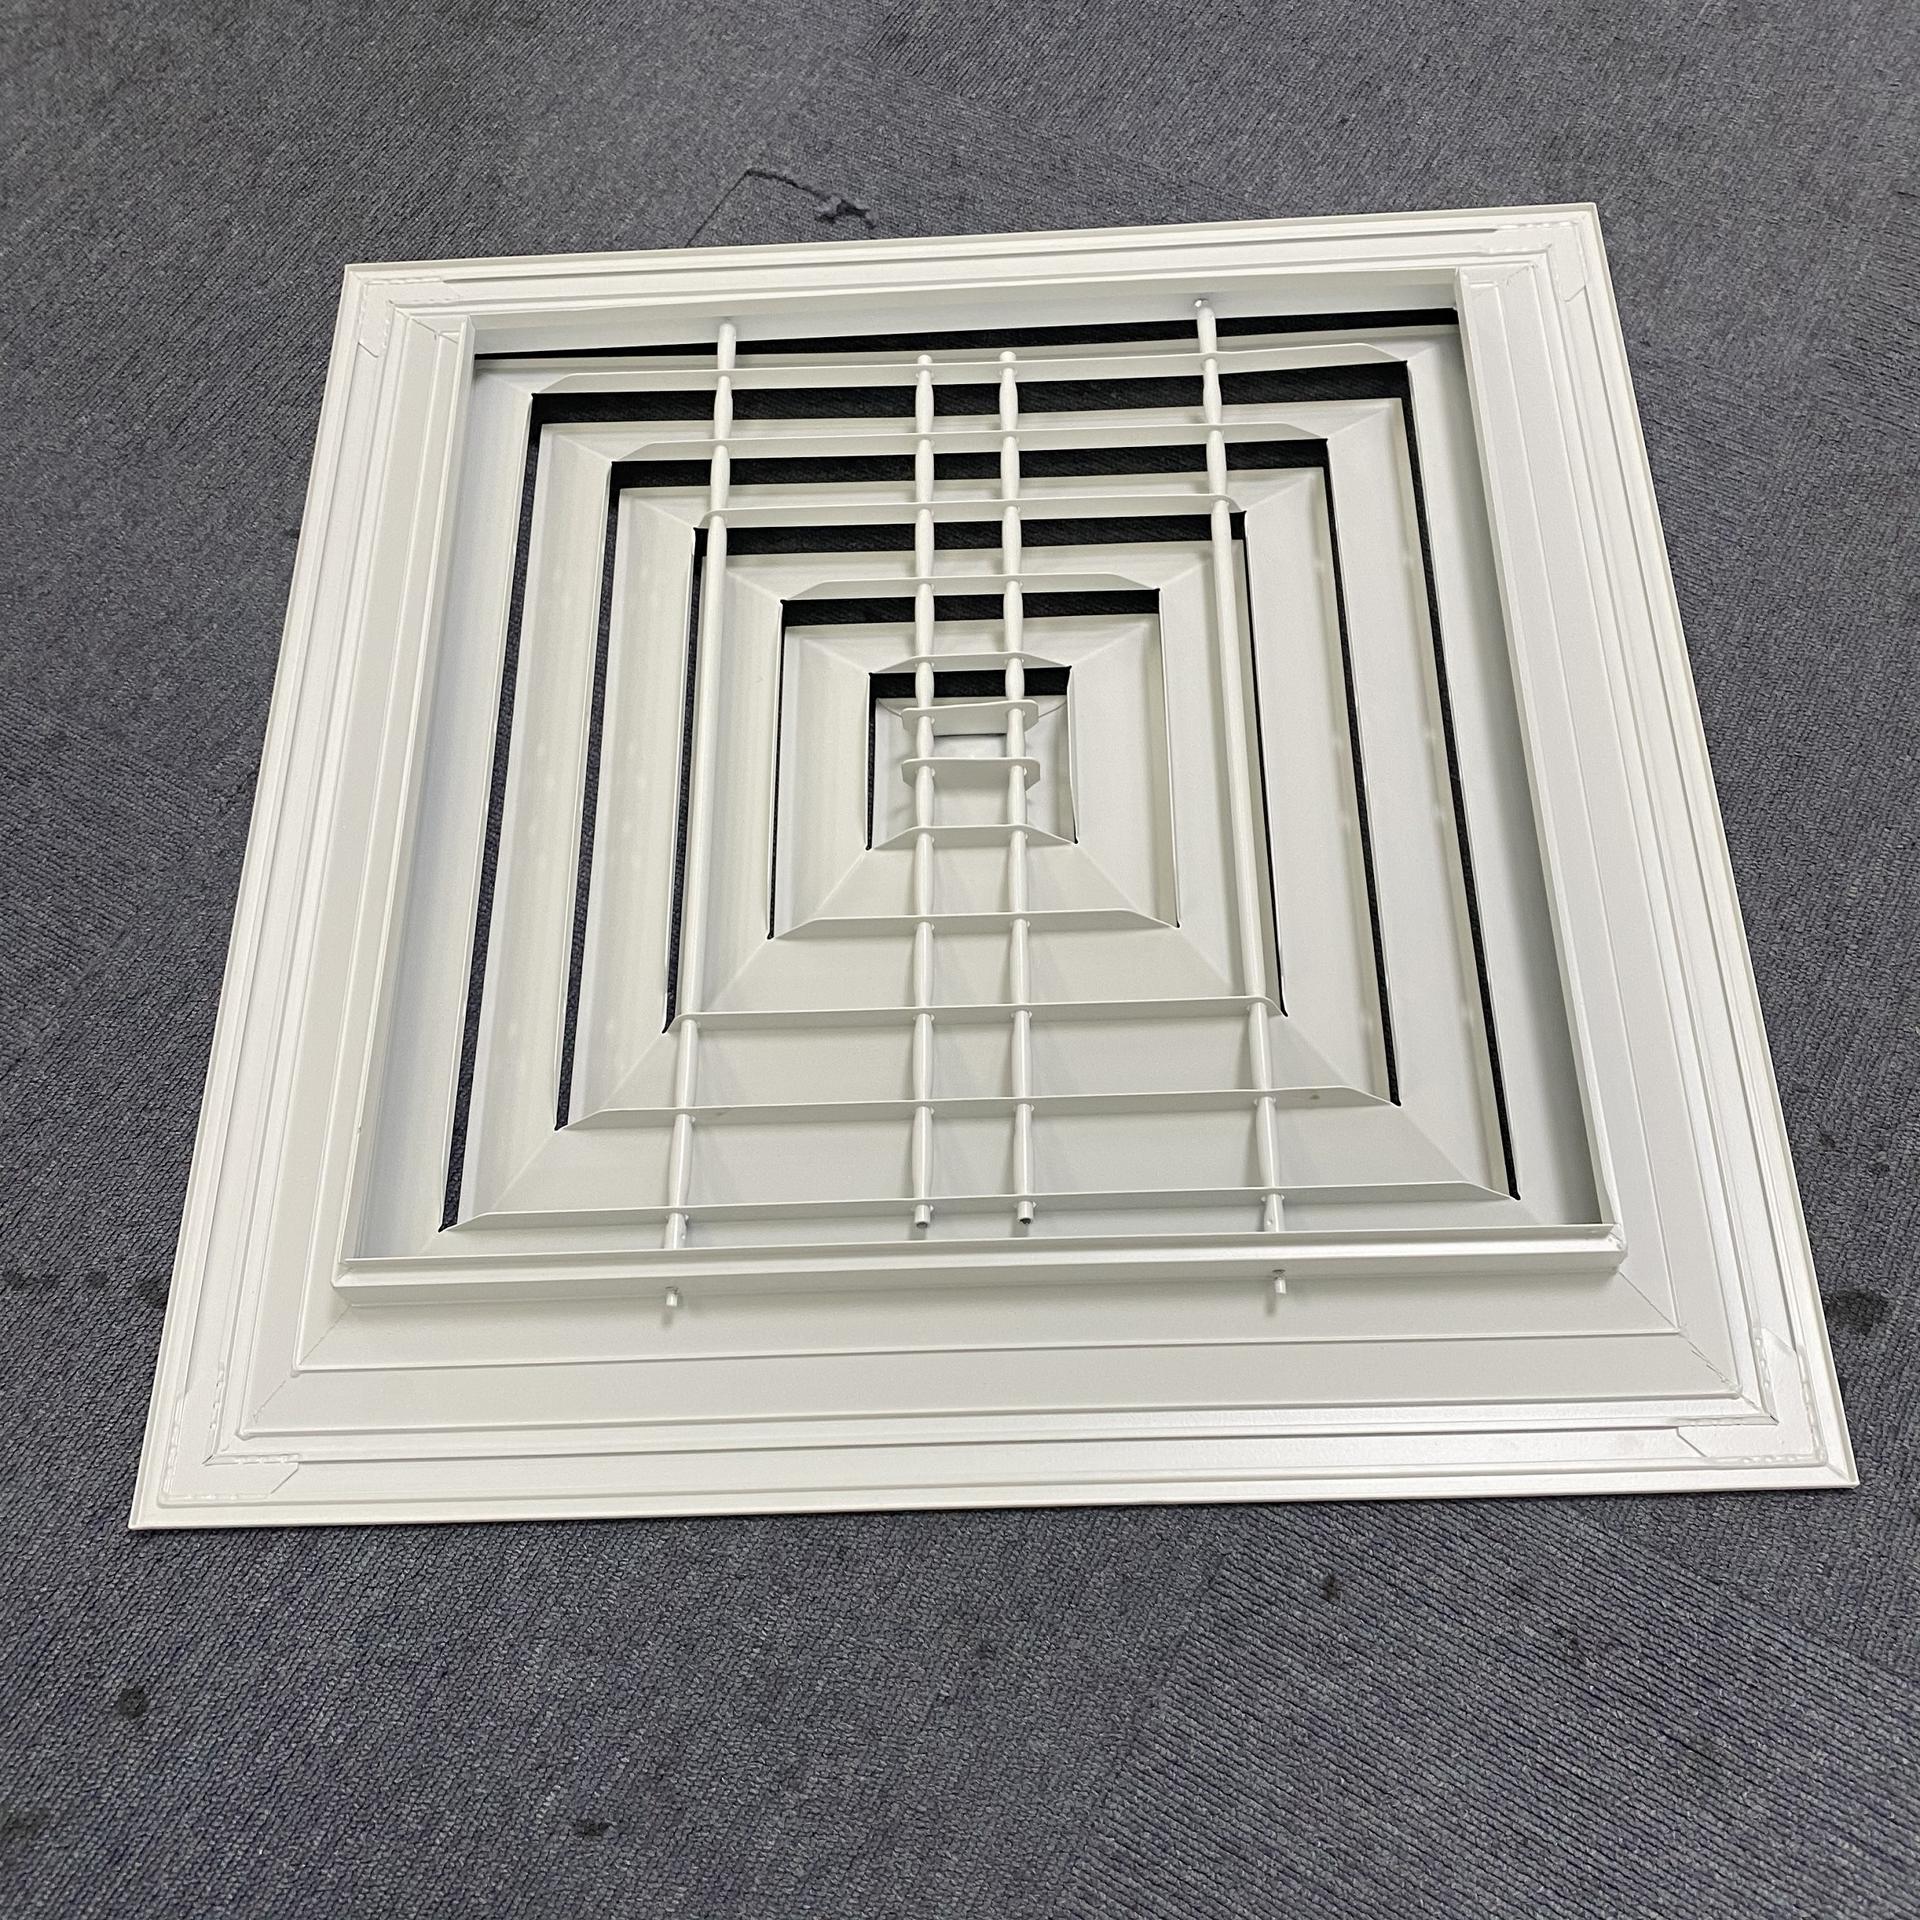 Hvac Air Conditioning System Ventilation Aluminum Architectural Ceiling 4 Way Square Diffuser